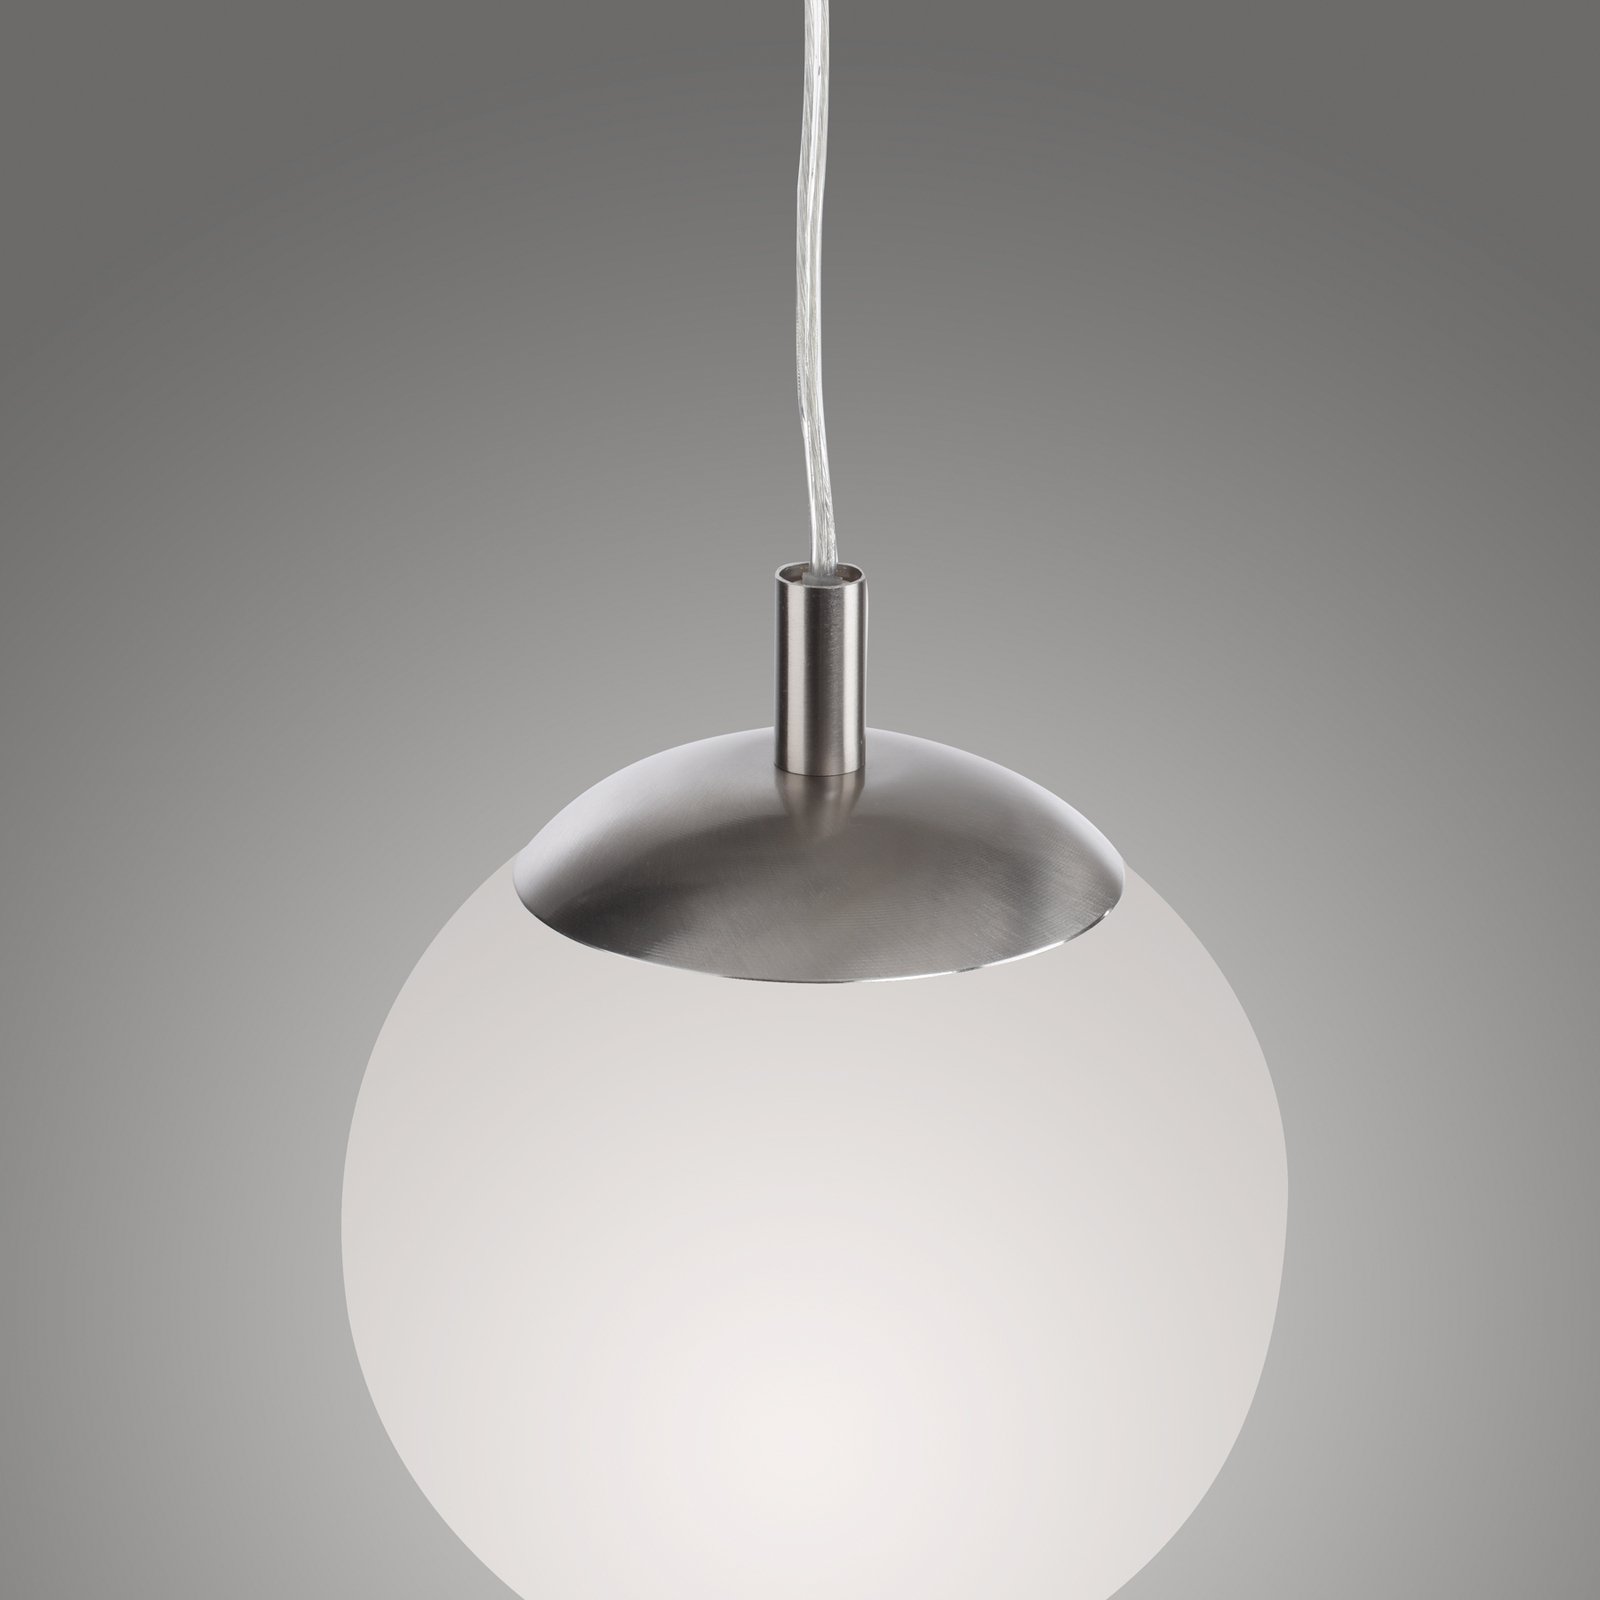 Paul Neuhaus Bolo hanglamp, glazen kap, Ø 20cm